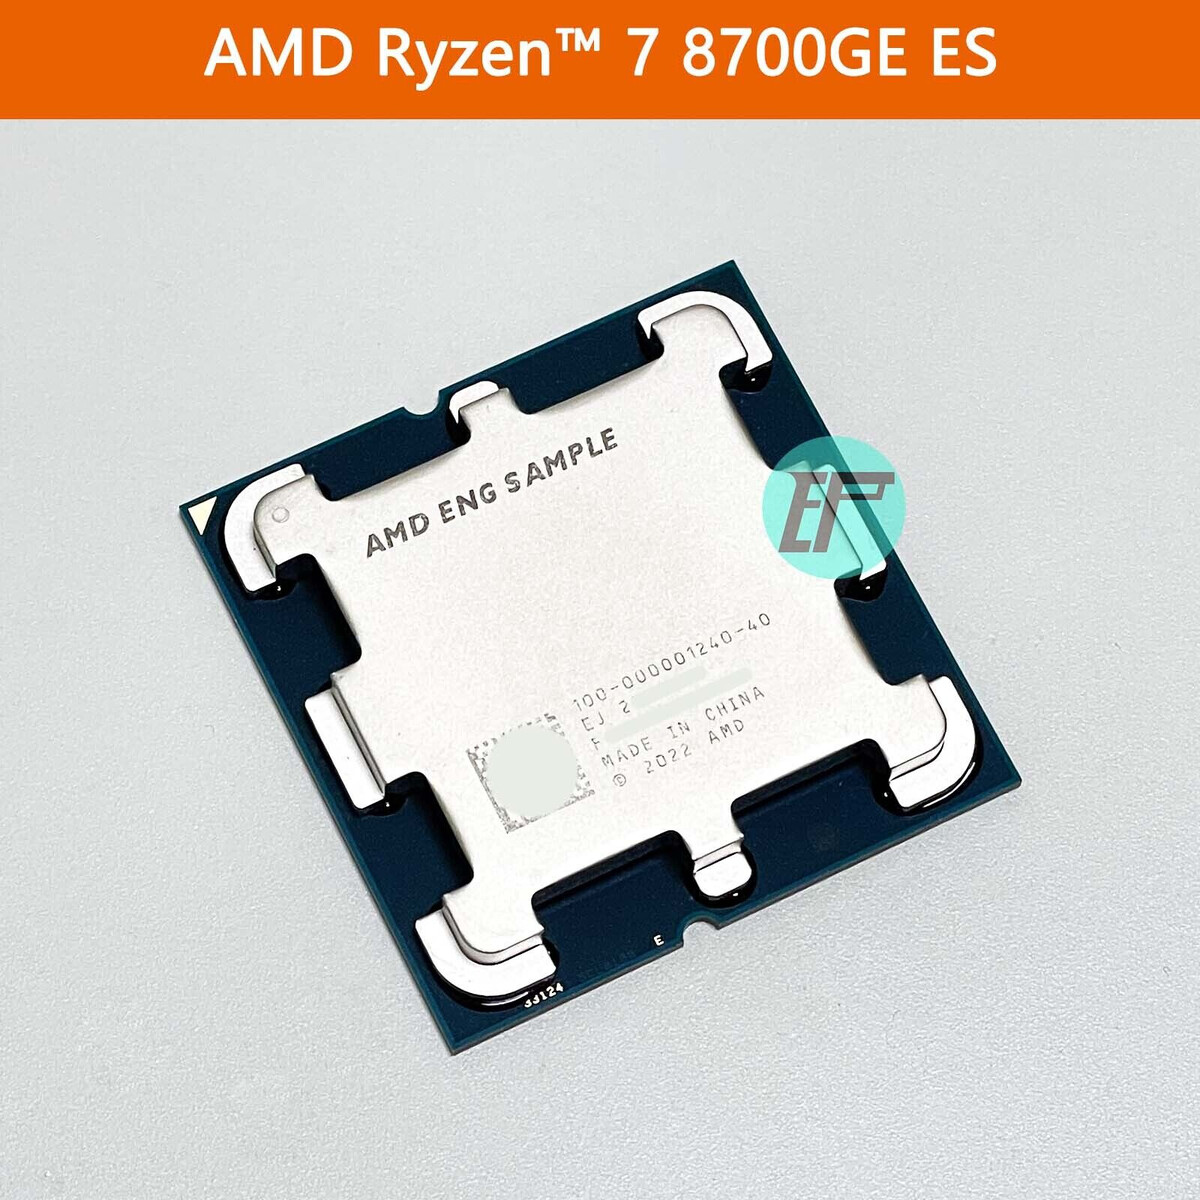 Comparison between AMD Ryzen 7 8700GE Engineering Sample and the standard 8700G APU.